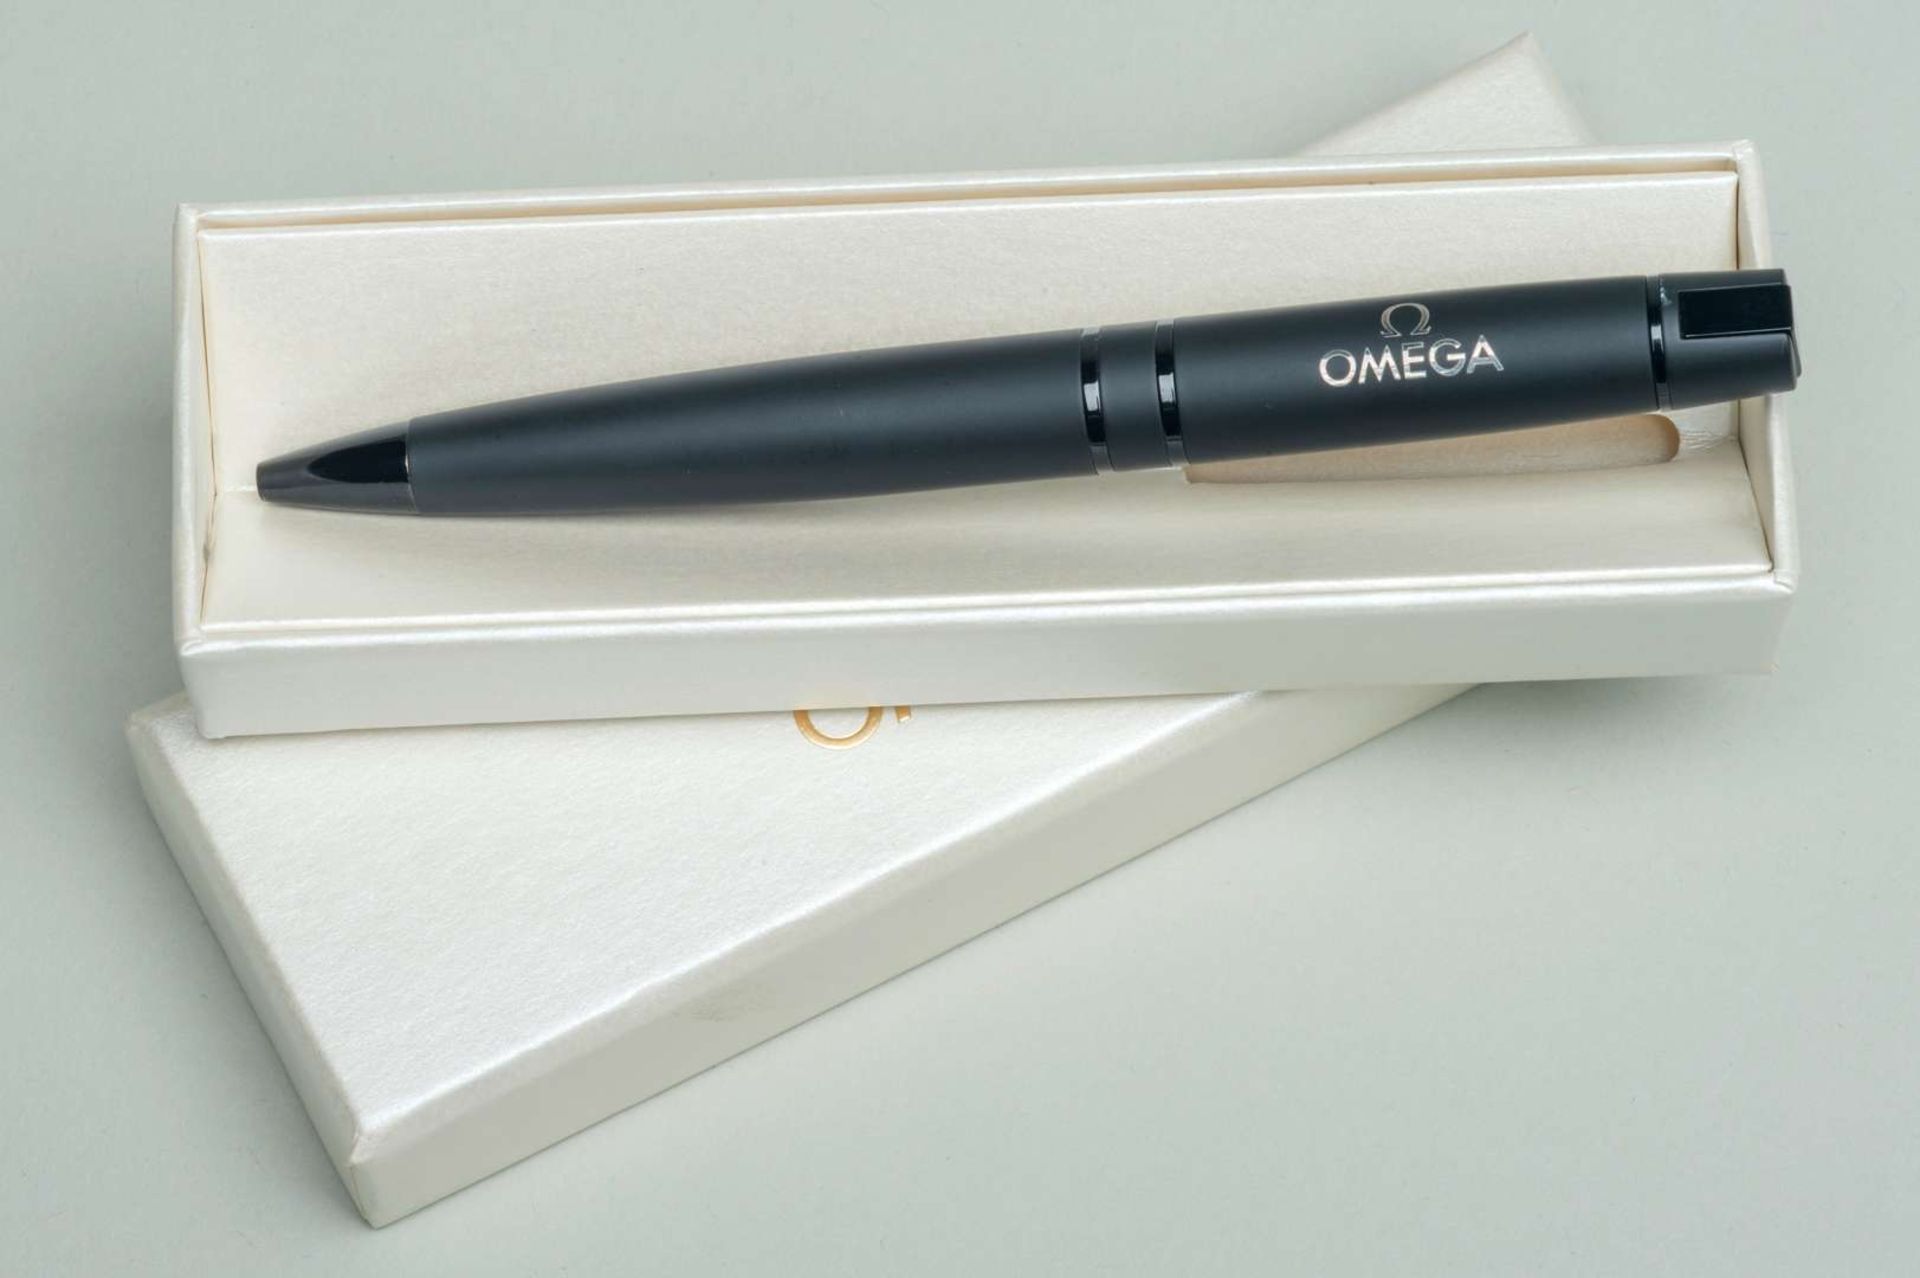 Omega pen - Image 2 of 3